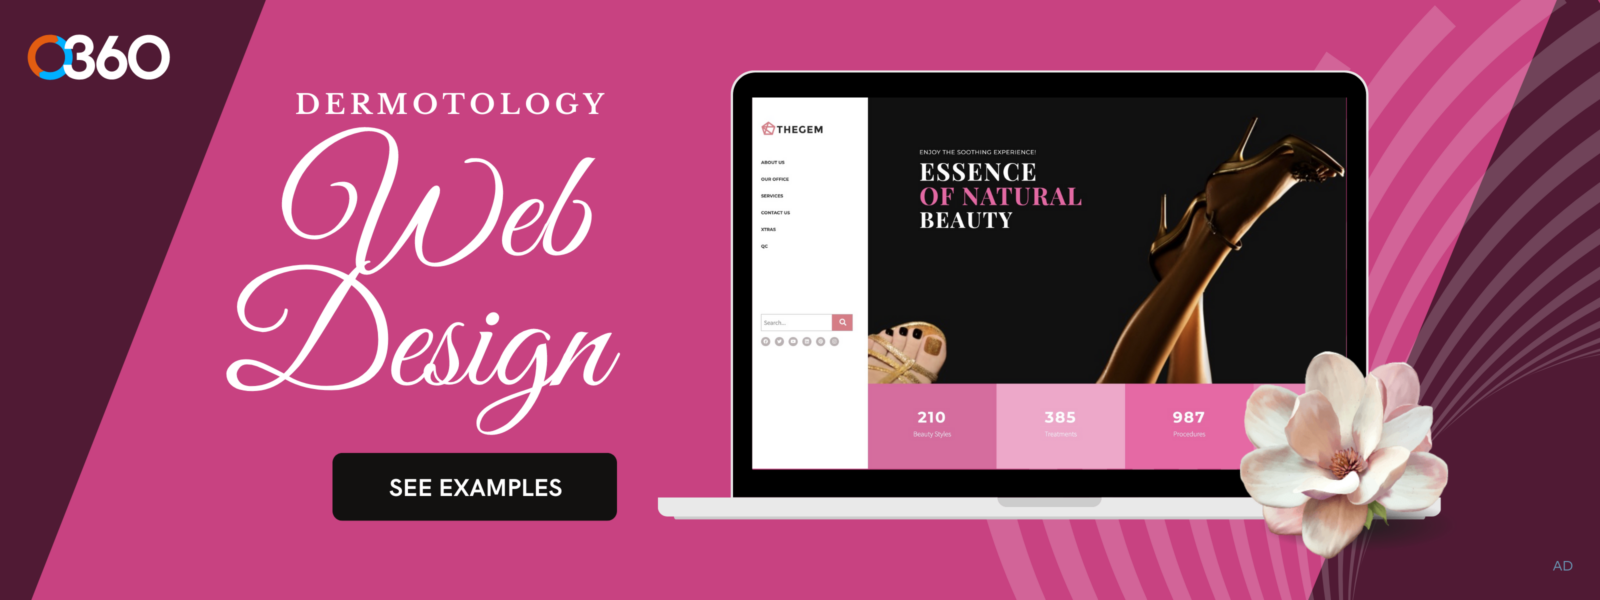 Dermatology web design o360 ad